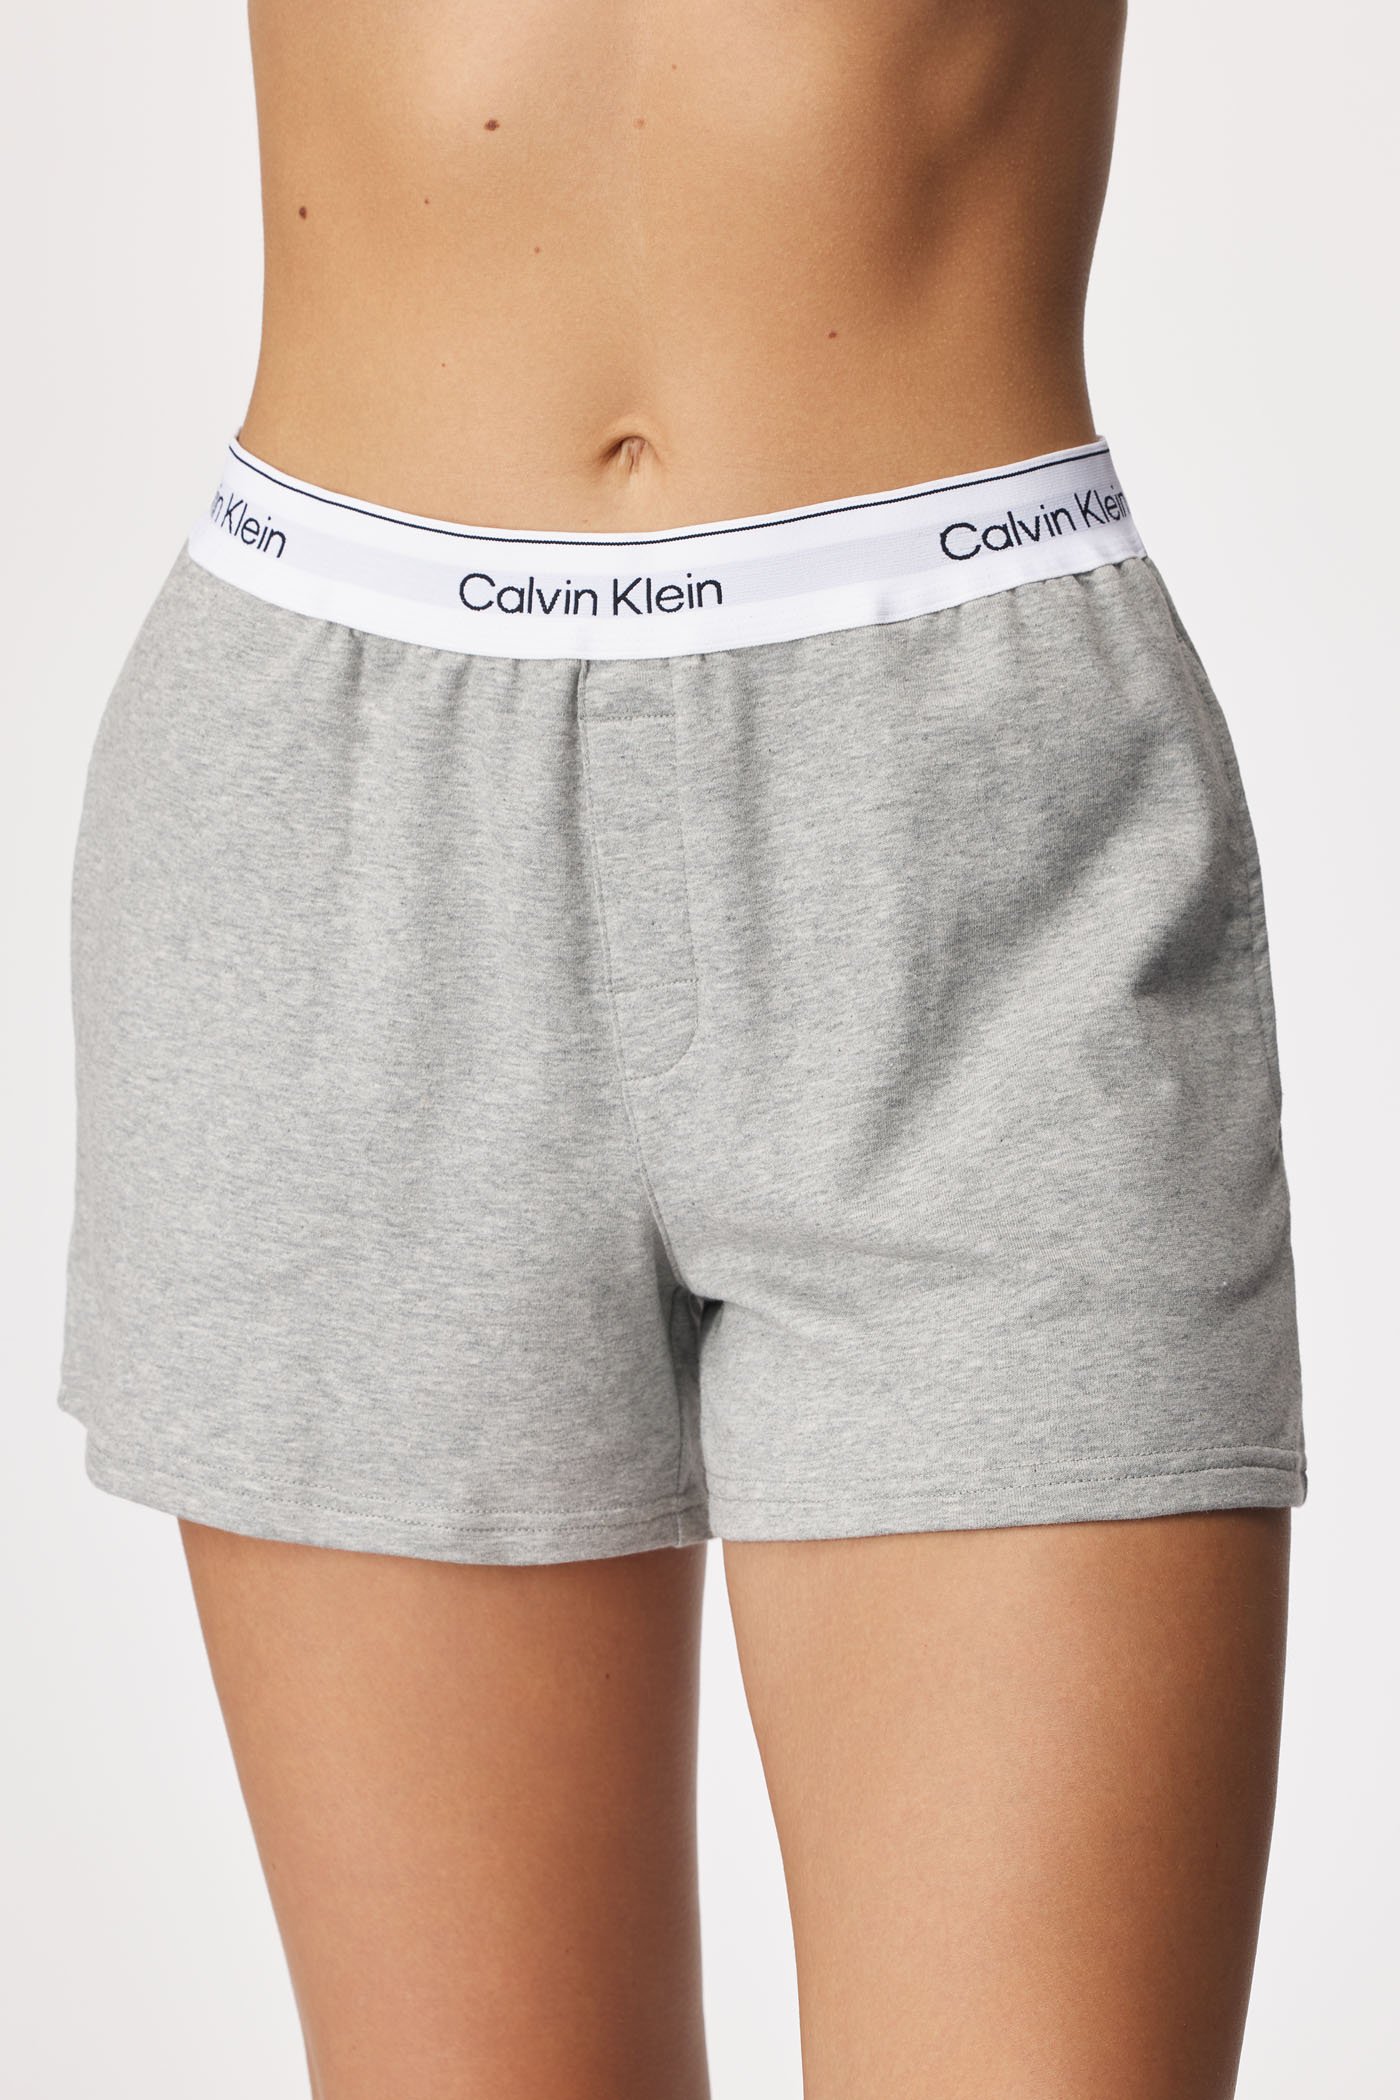 Calvin Klein női pizsamanadrágok | Astratex.hu